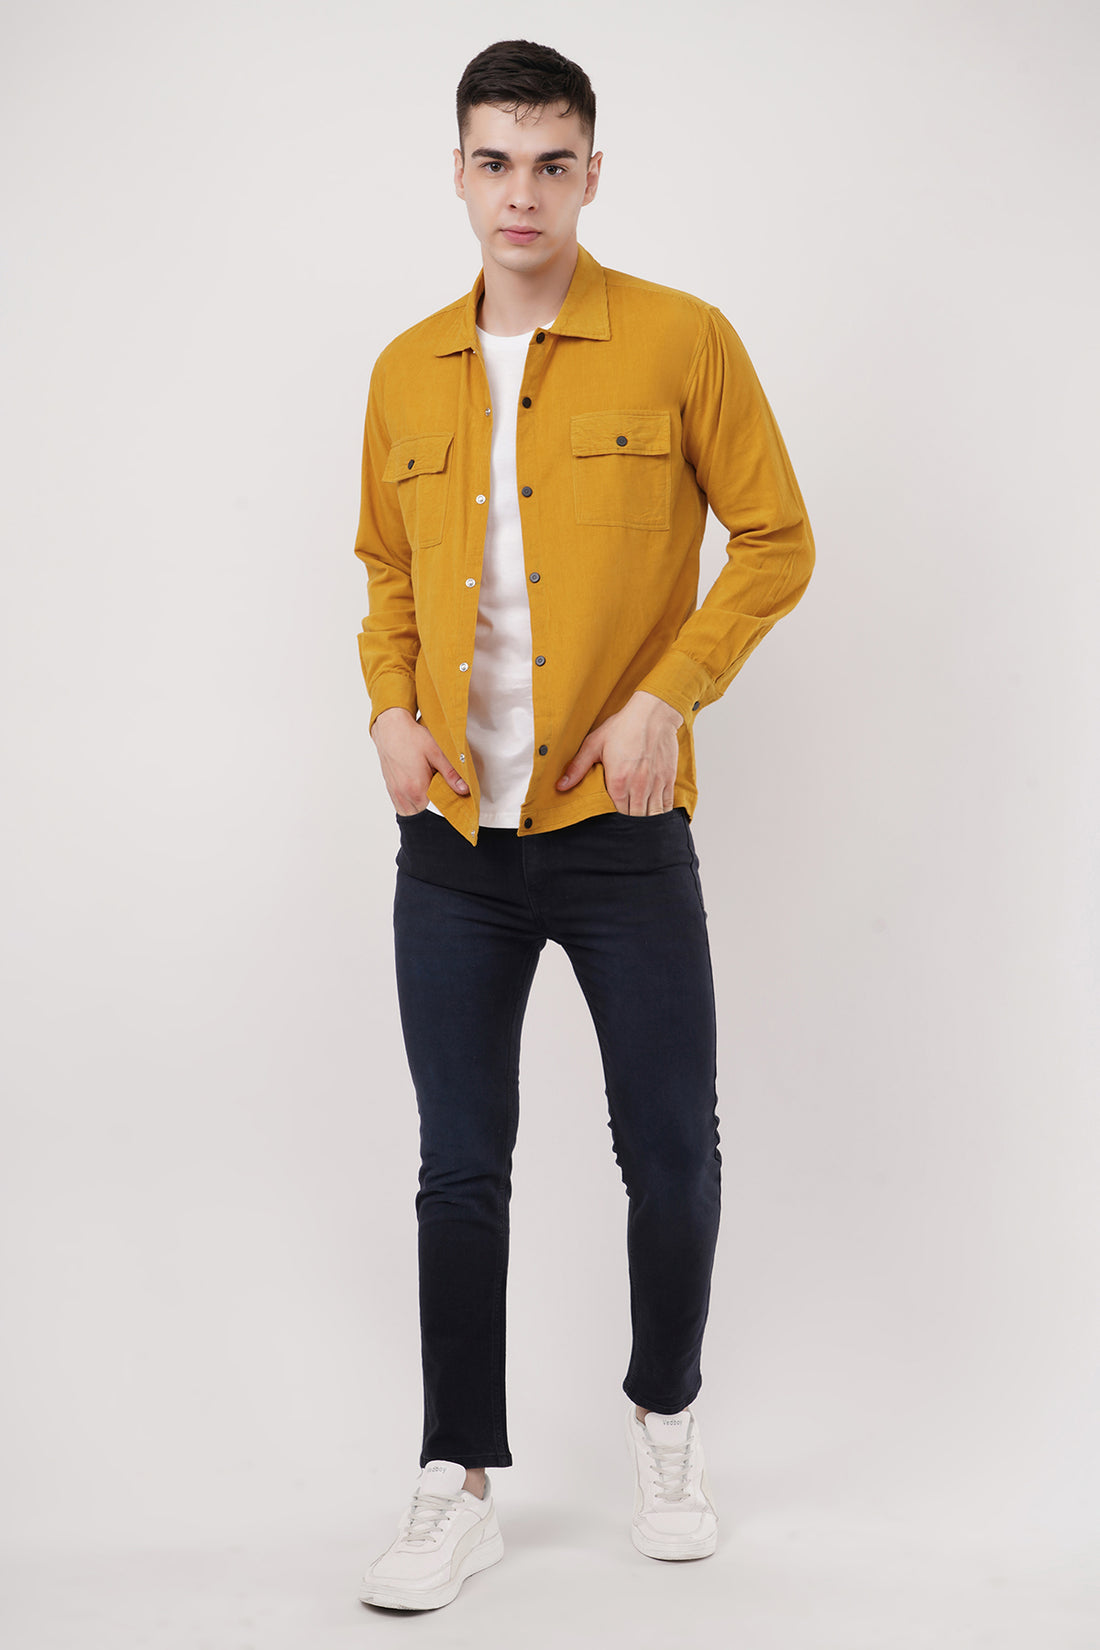 Brandy Punch Corduroy Shirtover Double Pocket Overshirt in Organic Cotton Shirt Casual Look with ColourJoyLondon